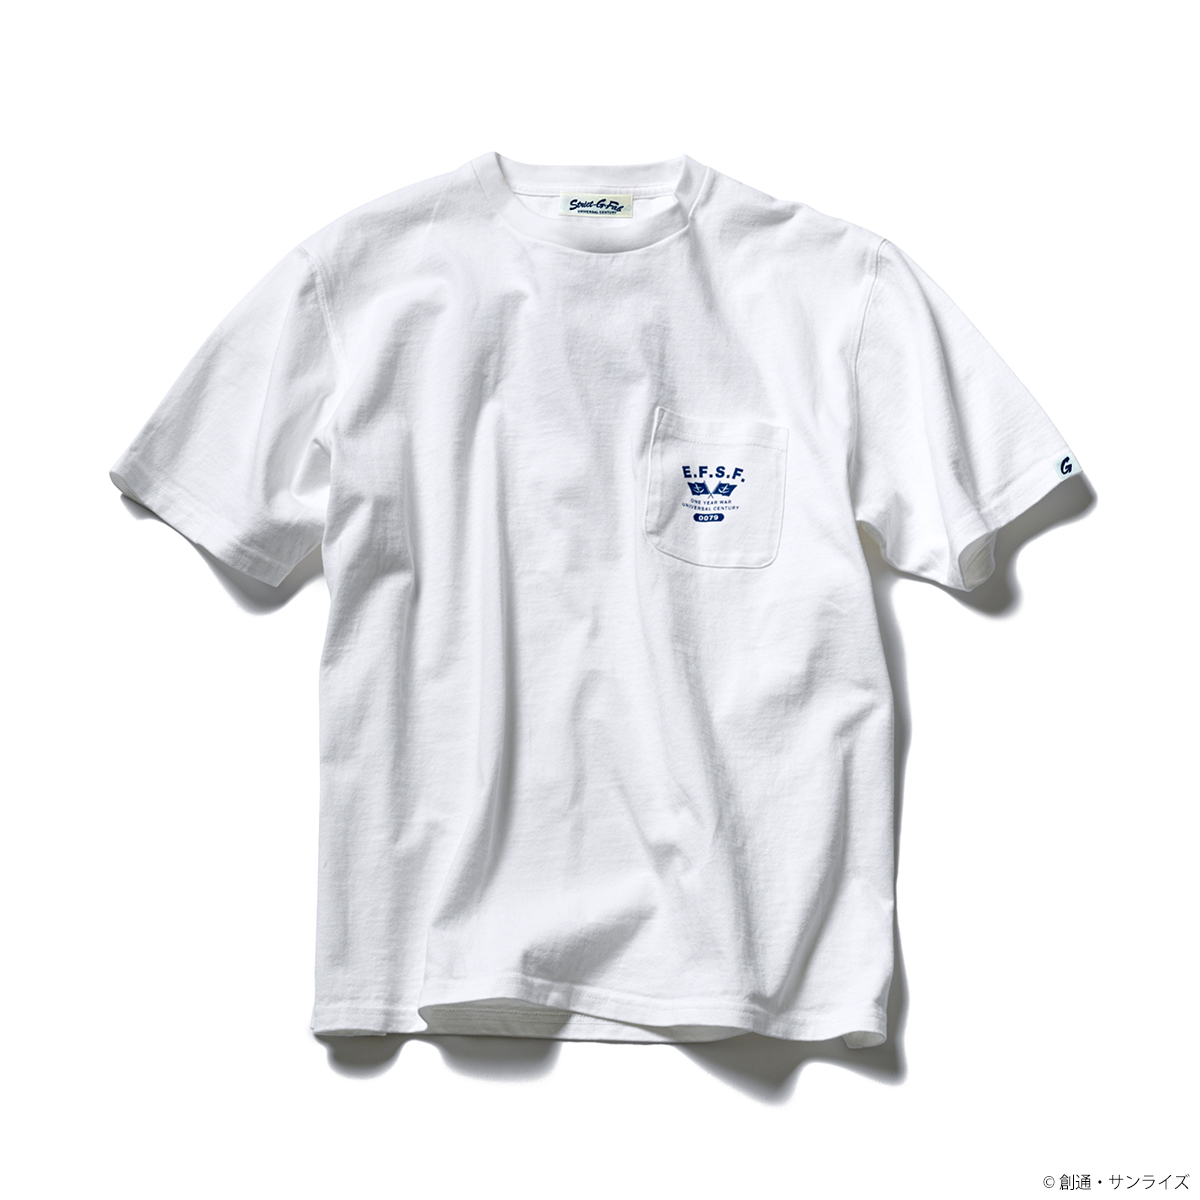 STRICT-G.Fab 『機動戦士ガンダム』 ポケットTシャツ  LAUNCHING OF WB